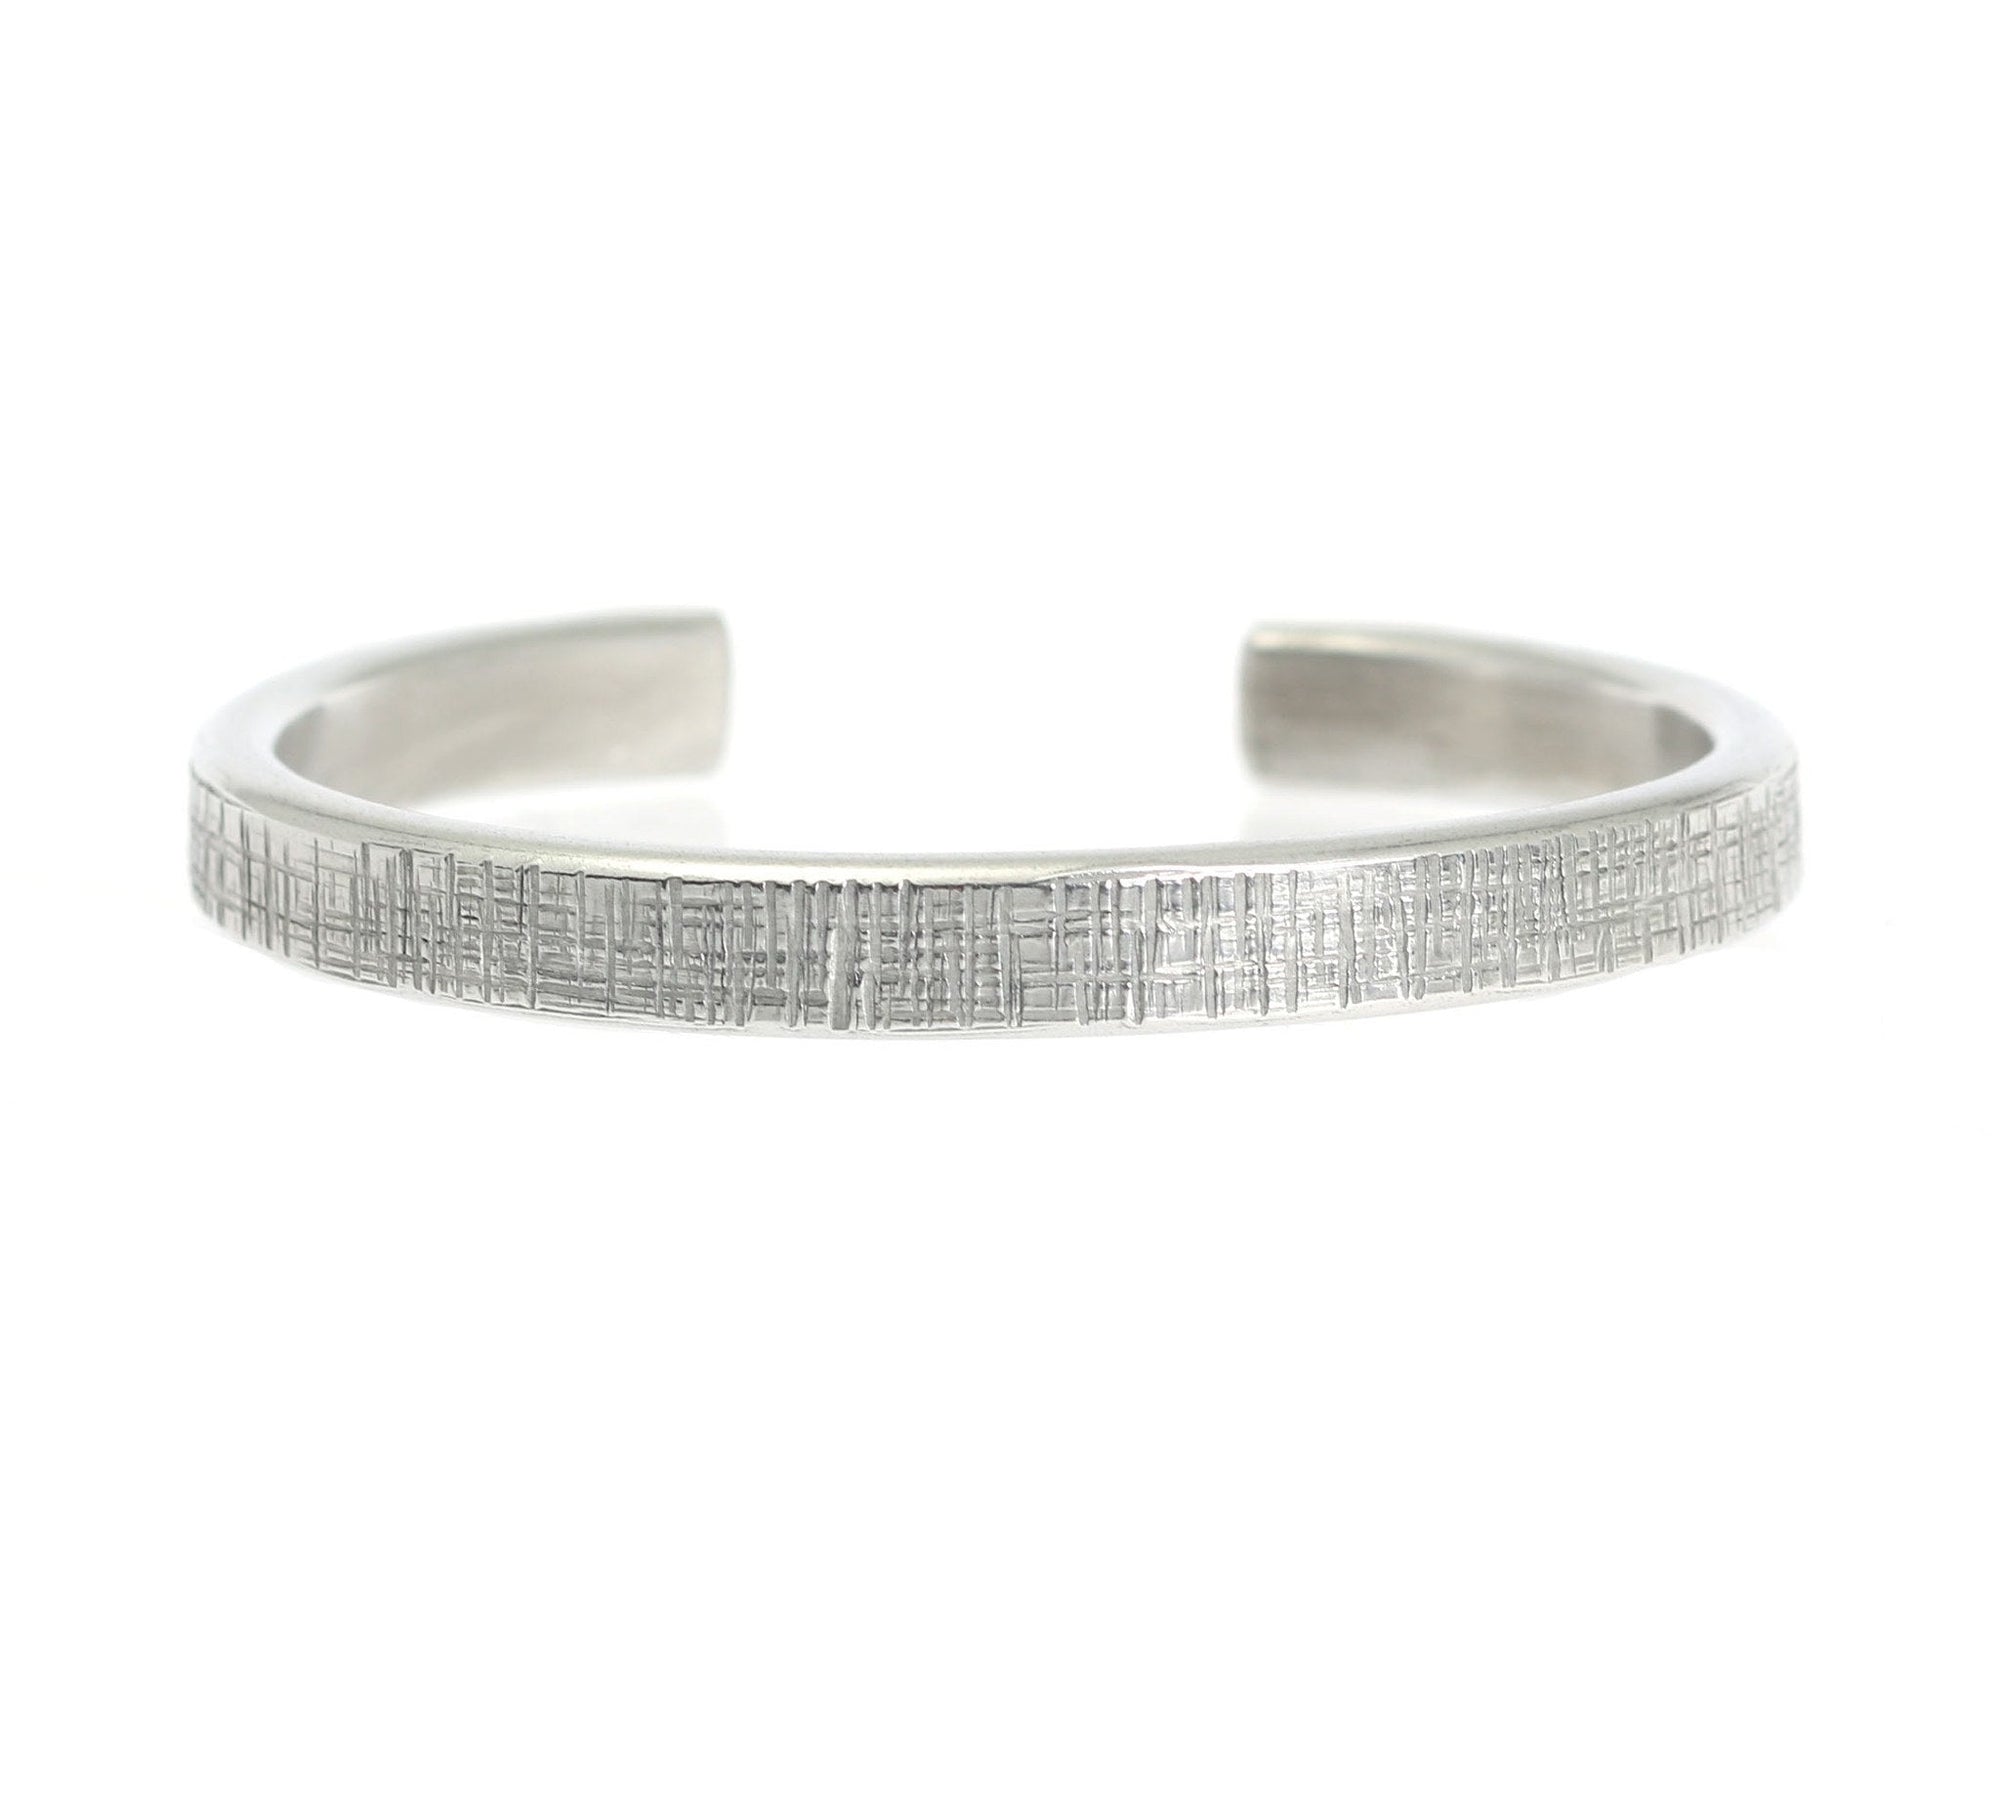 Detailed View of Thin Linen Aluminum Cuff Bracelet